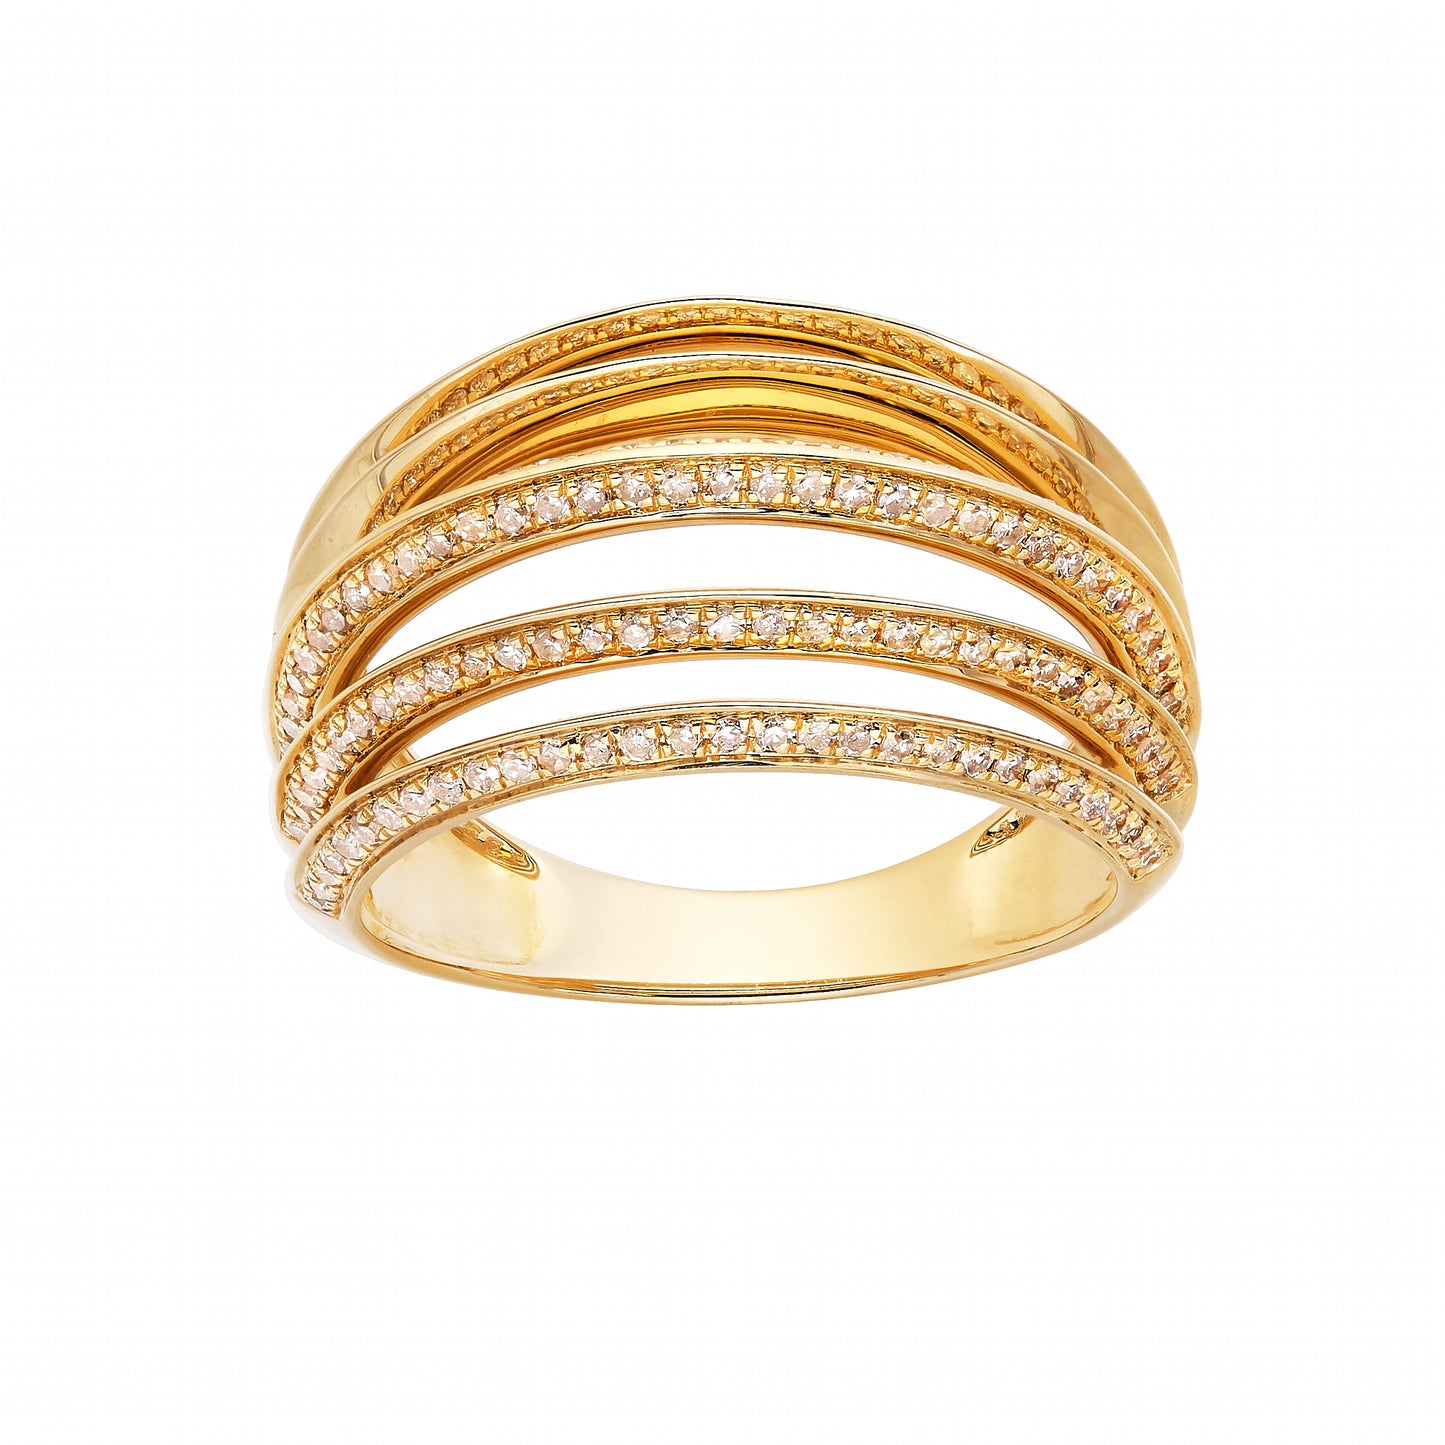 The Aerate Diamond Ring